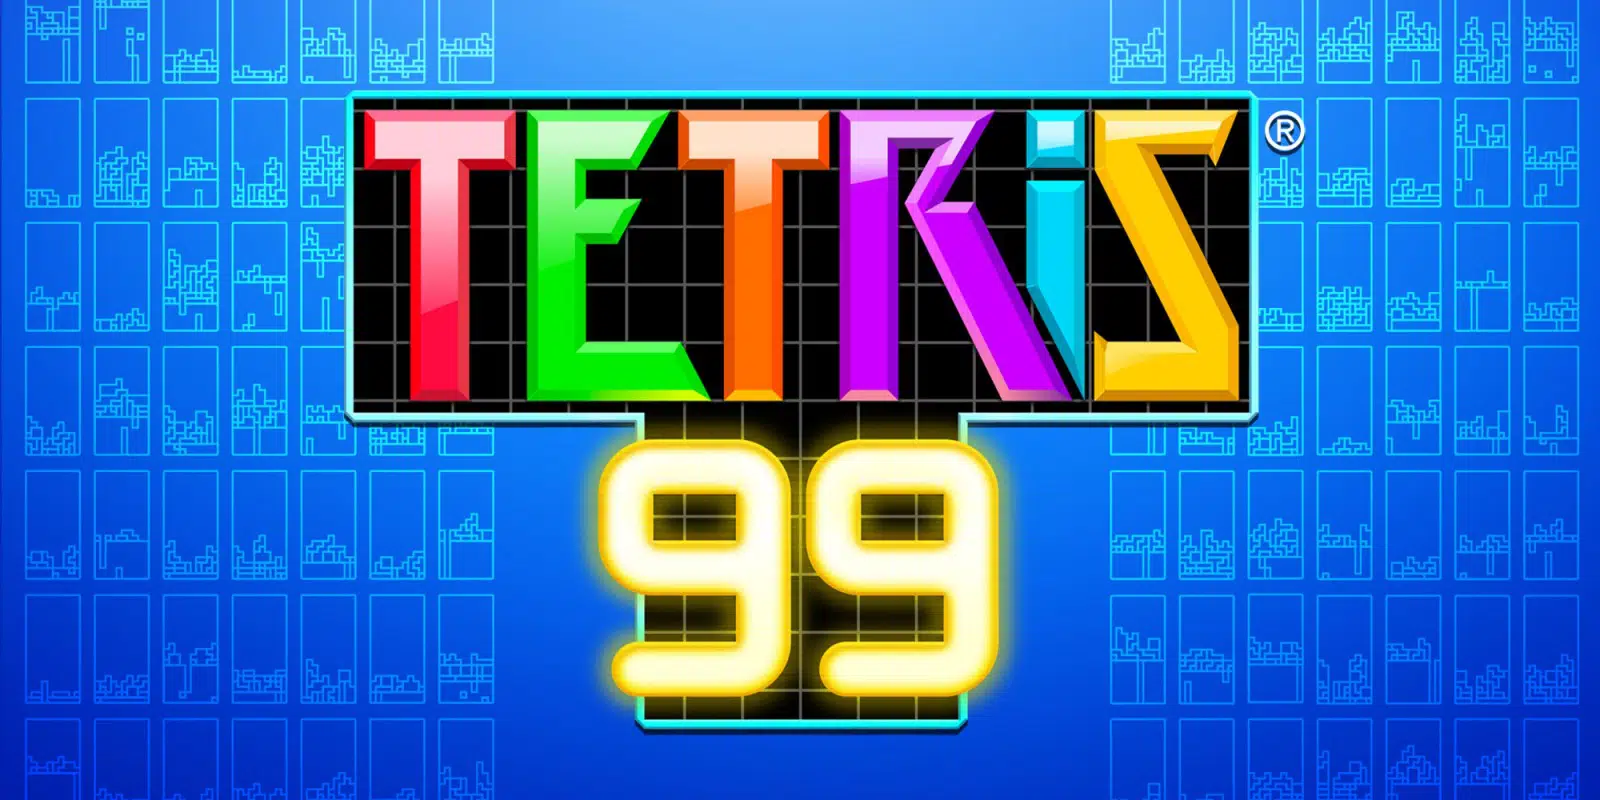 tetris99 switch